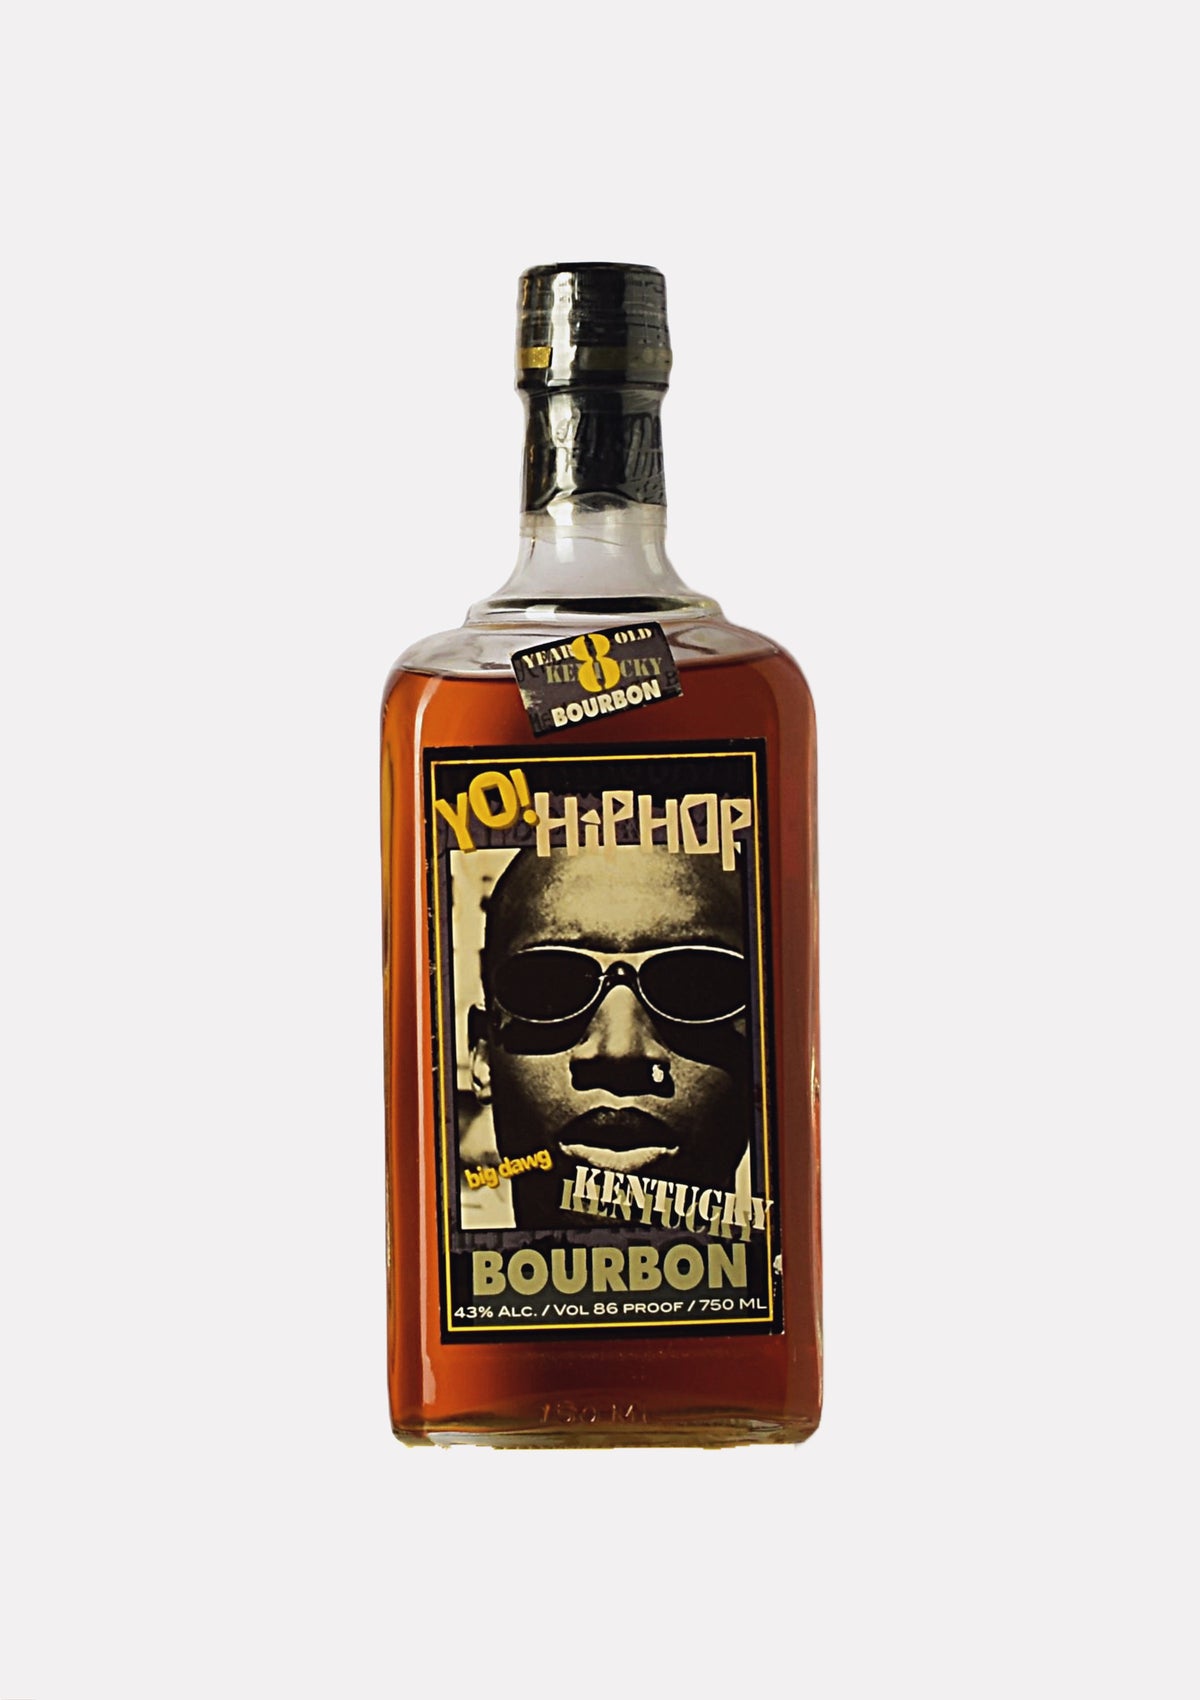 Yo! HipHop Big Dawg Kentucky Bourbon 8 Jahre